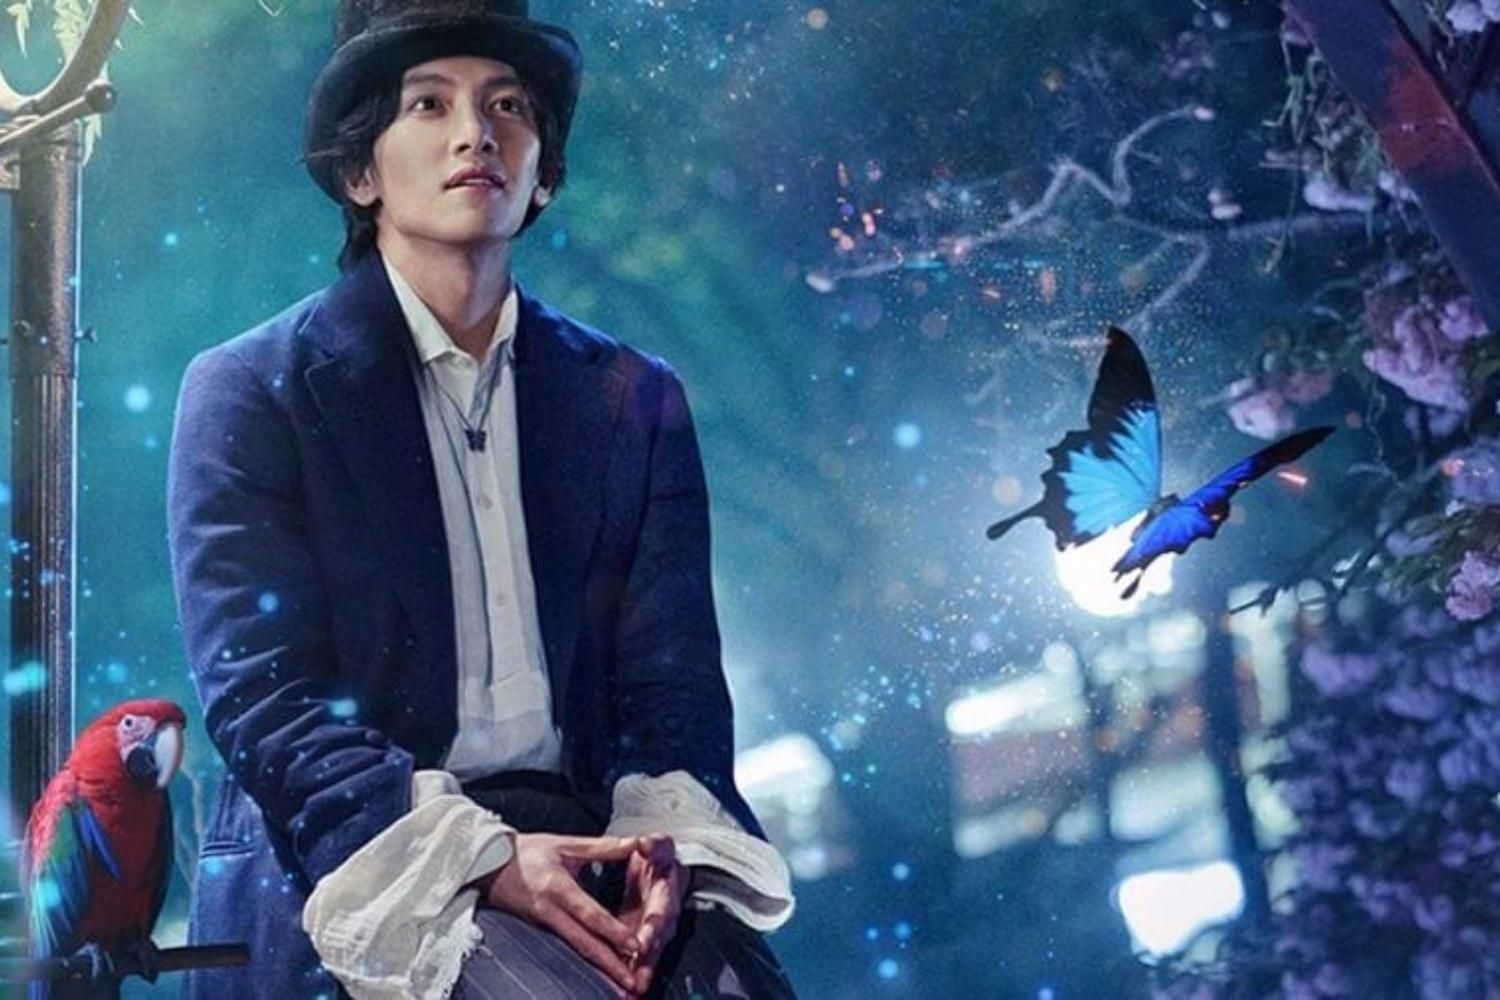 Ji Chang wook plays magician in 'Sound of Magic' ep 1